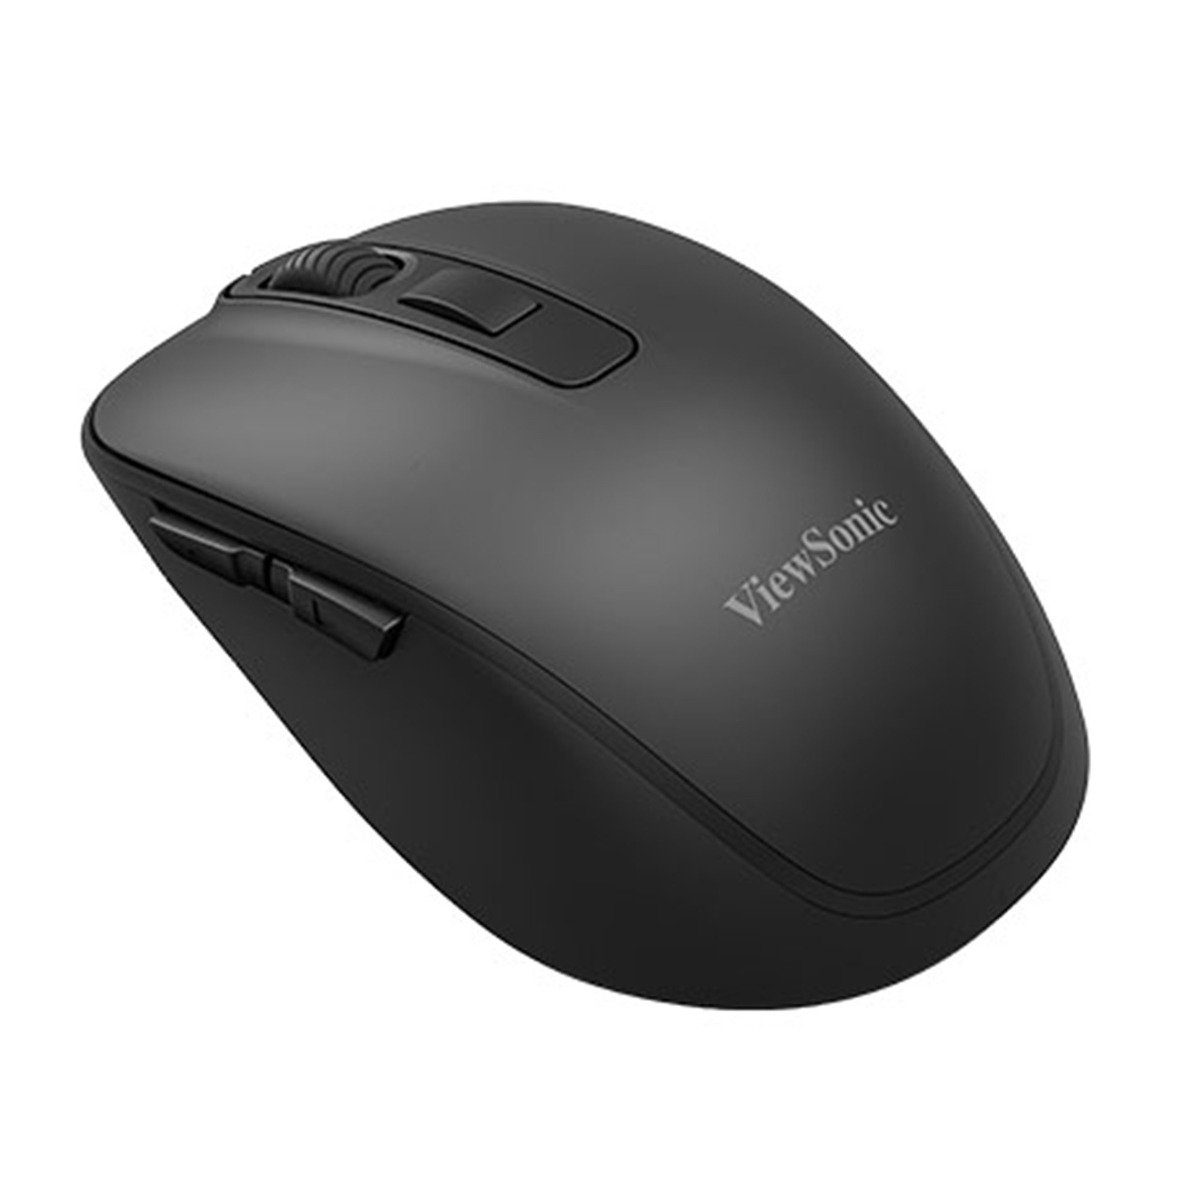 Viewsonic Wireless Mouse MW655